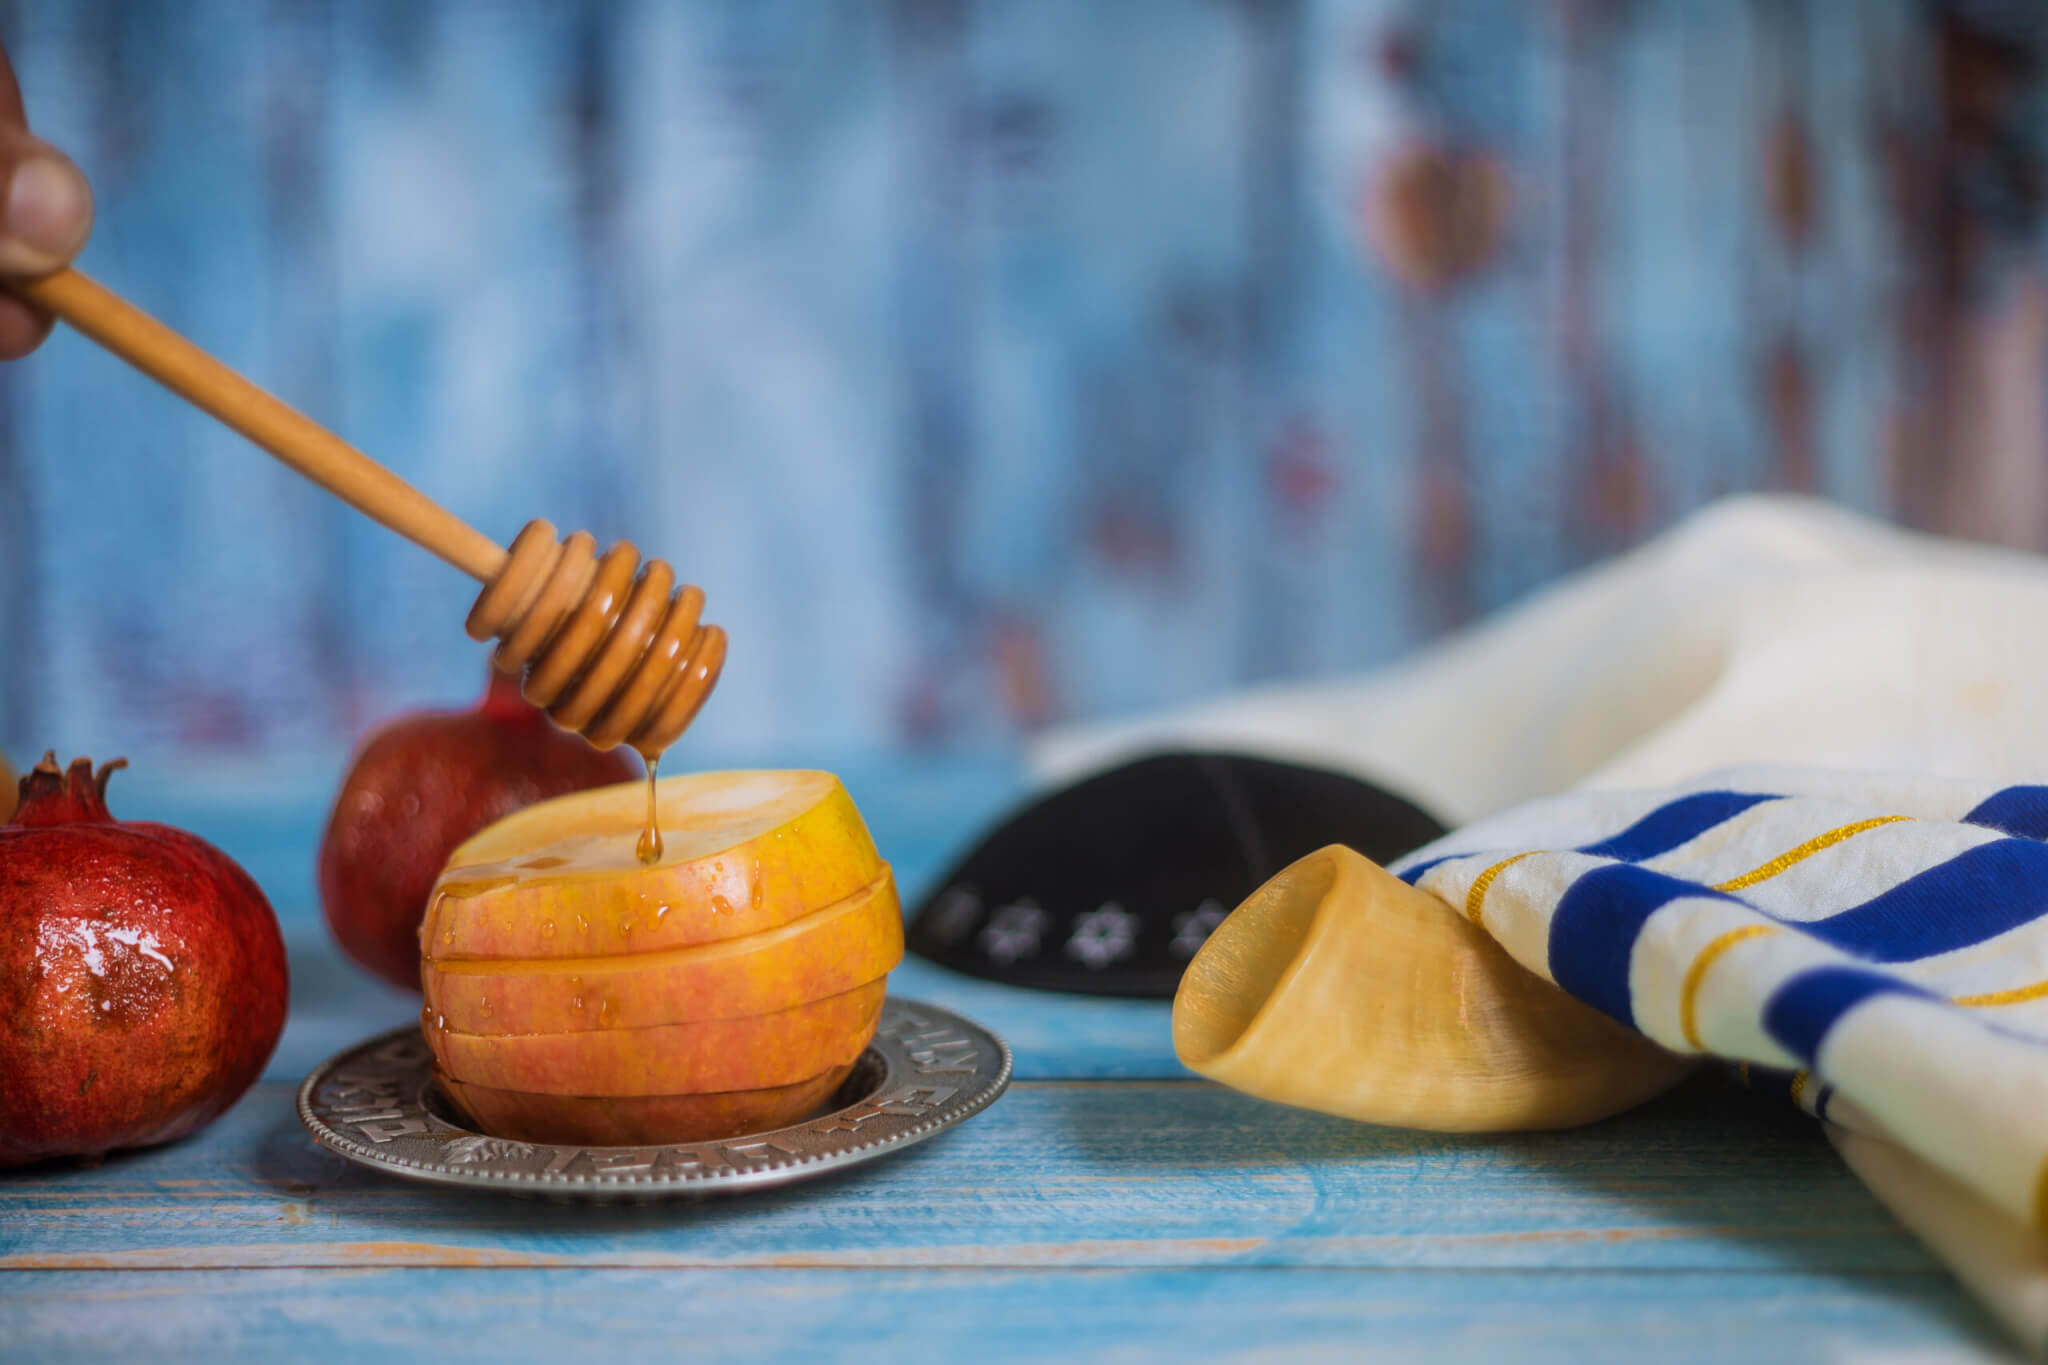 Jewish Rosh Hashana celebration featuring apples and honey